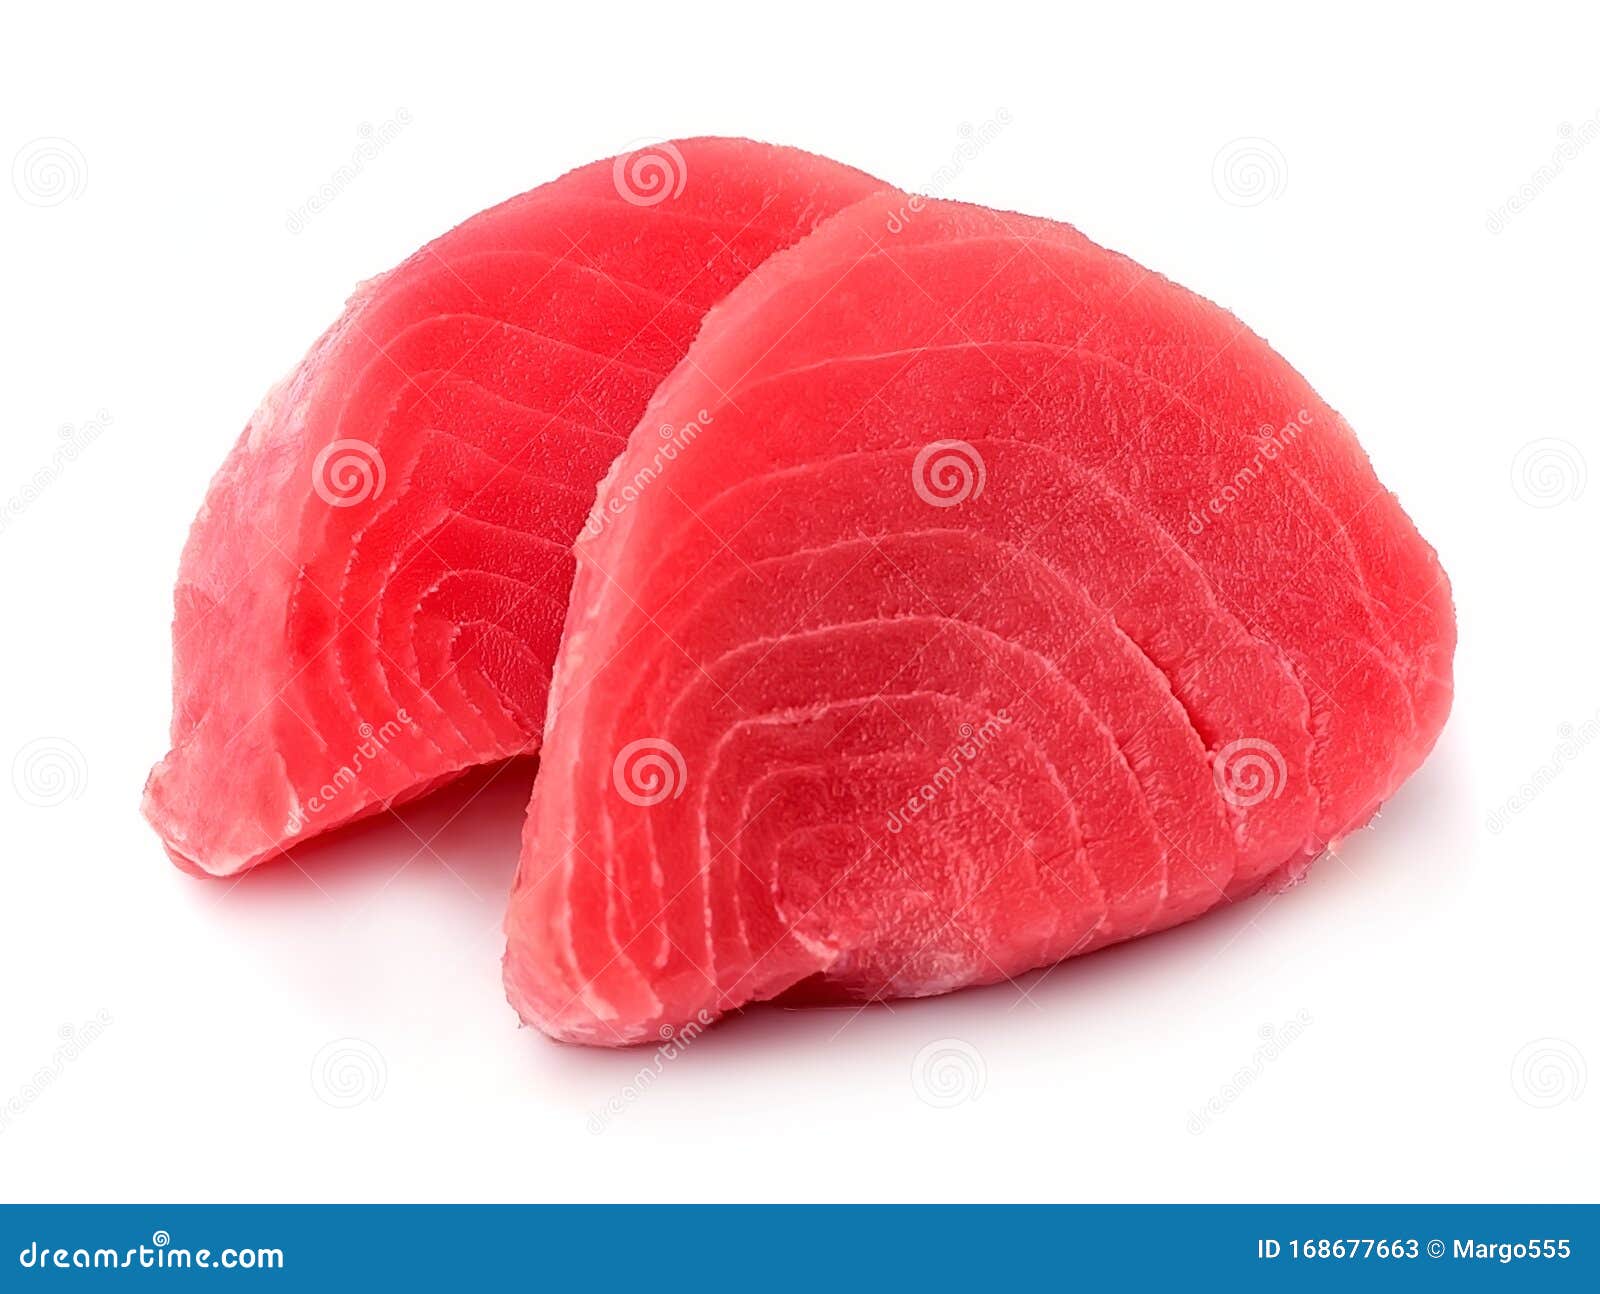 Fresh Tuna Fish Stock Image Image Of Vitamin Delicious 168677663